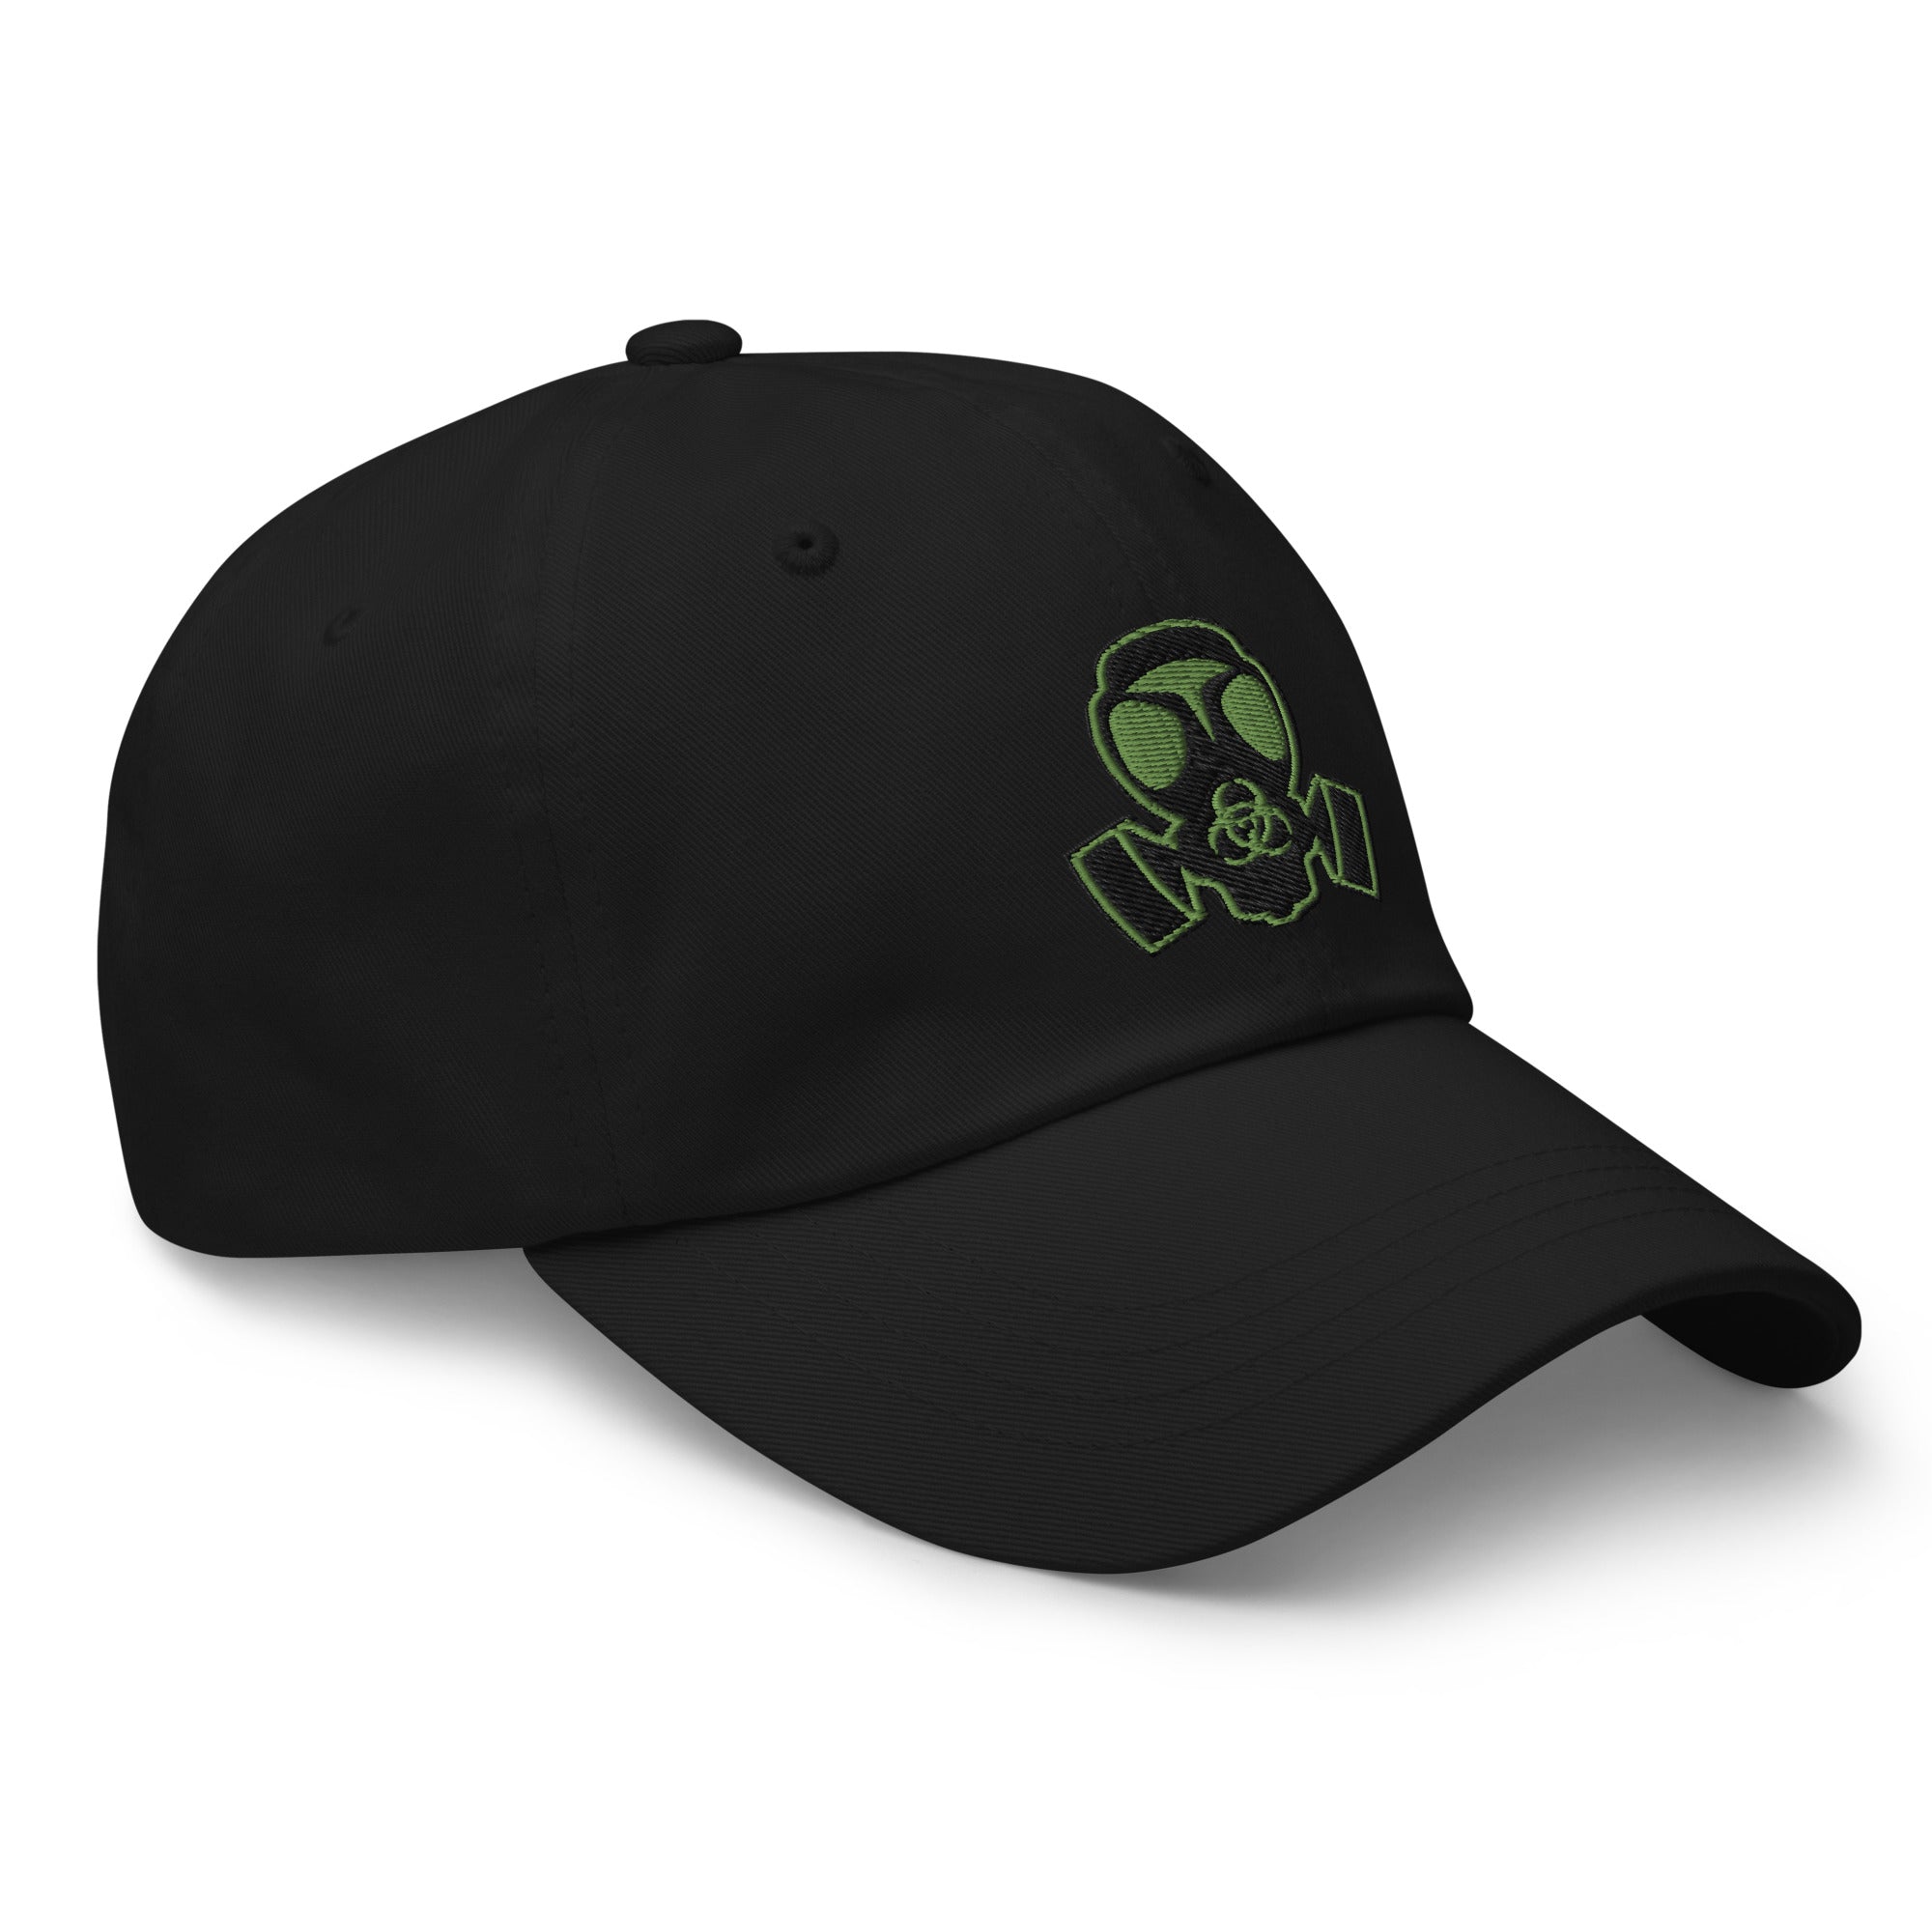 Bio Hazard Gas Mask Embroidered Baseball Cap Doomsday Prepper Green Thread Dad hat - Edge of Life Designs